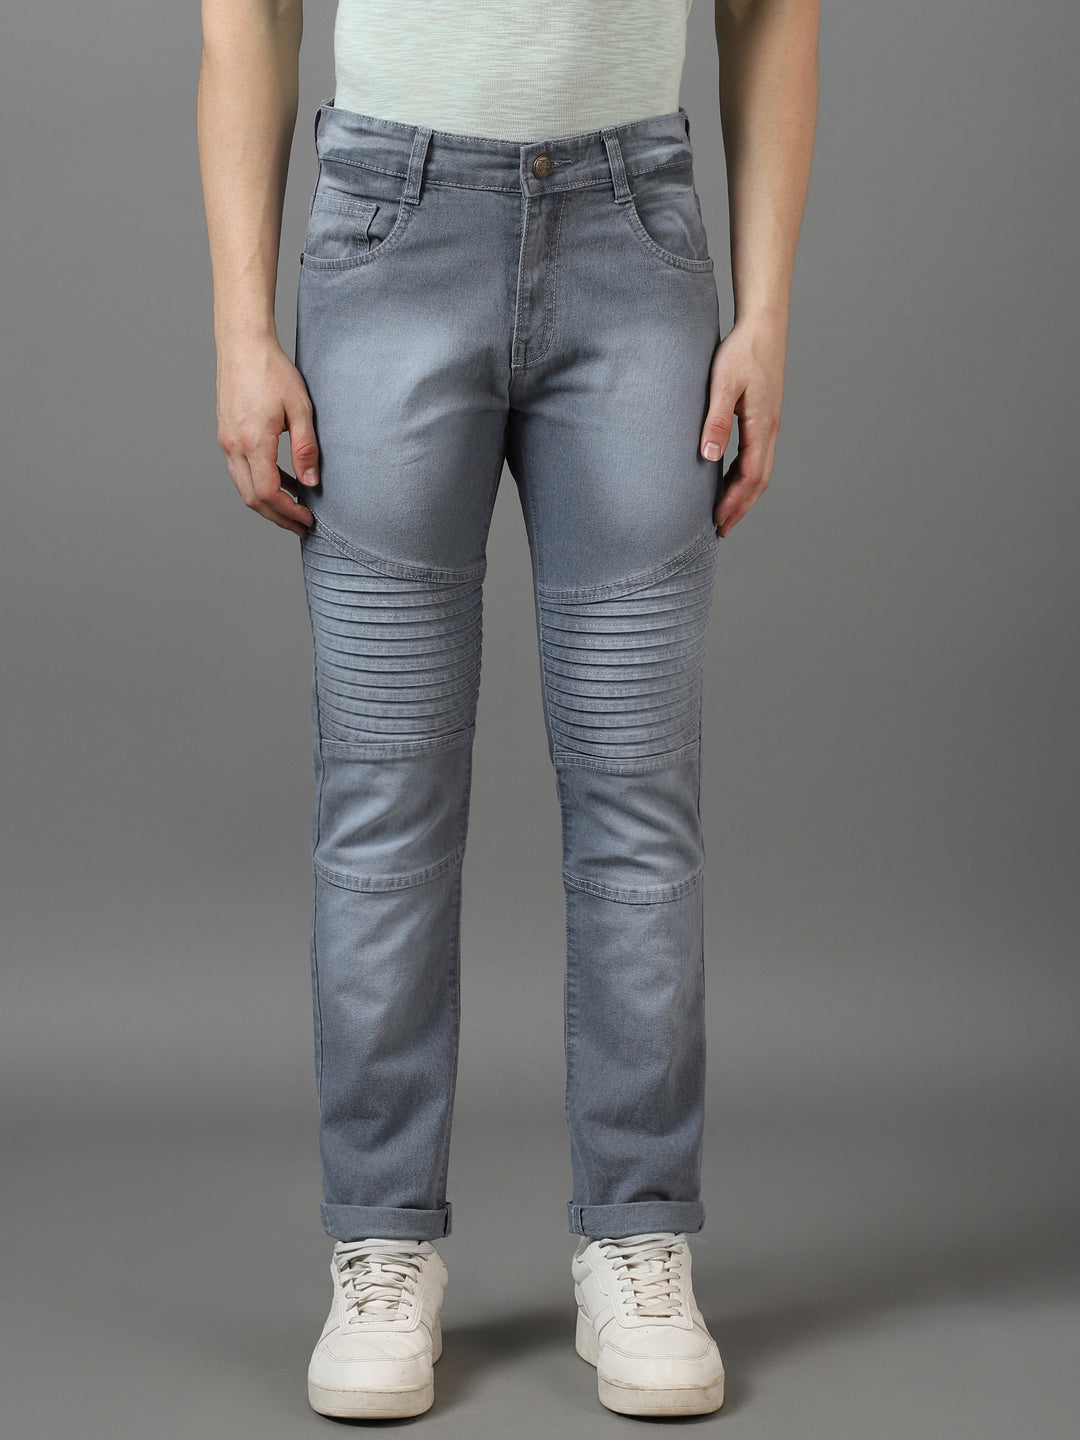 Urbano Fashion Men's Light Grey Slim Fit Jeans Stretchable